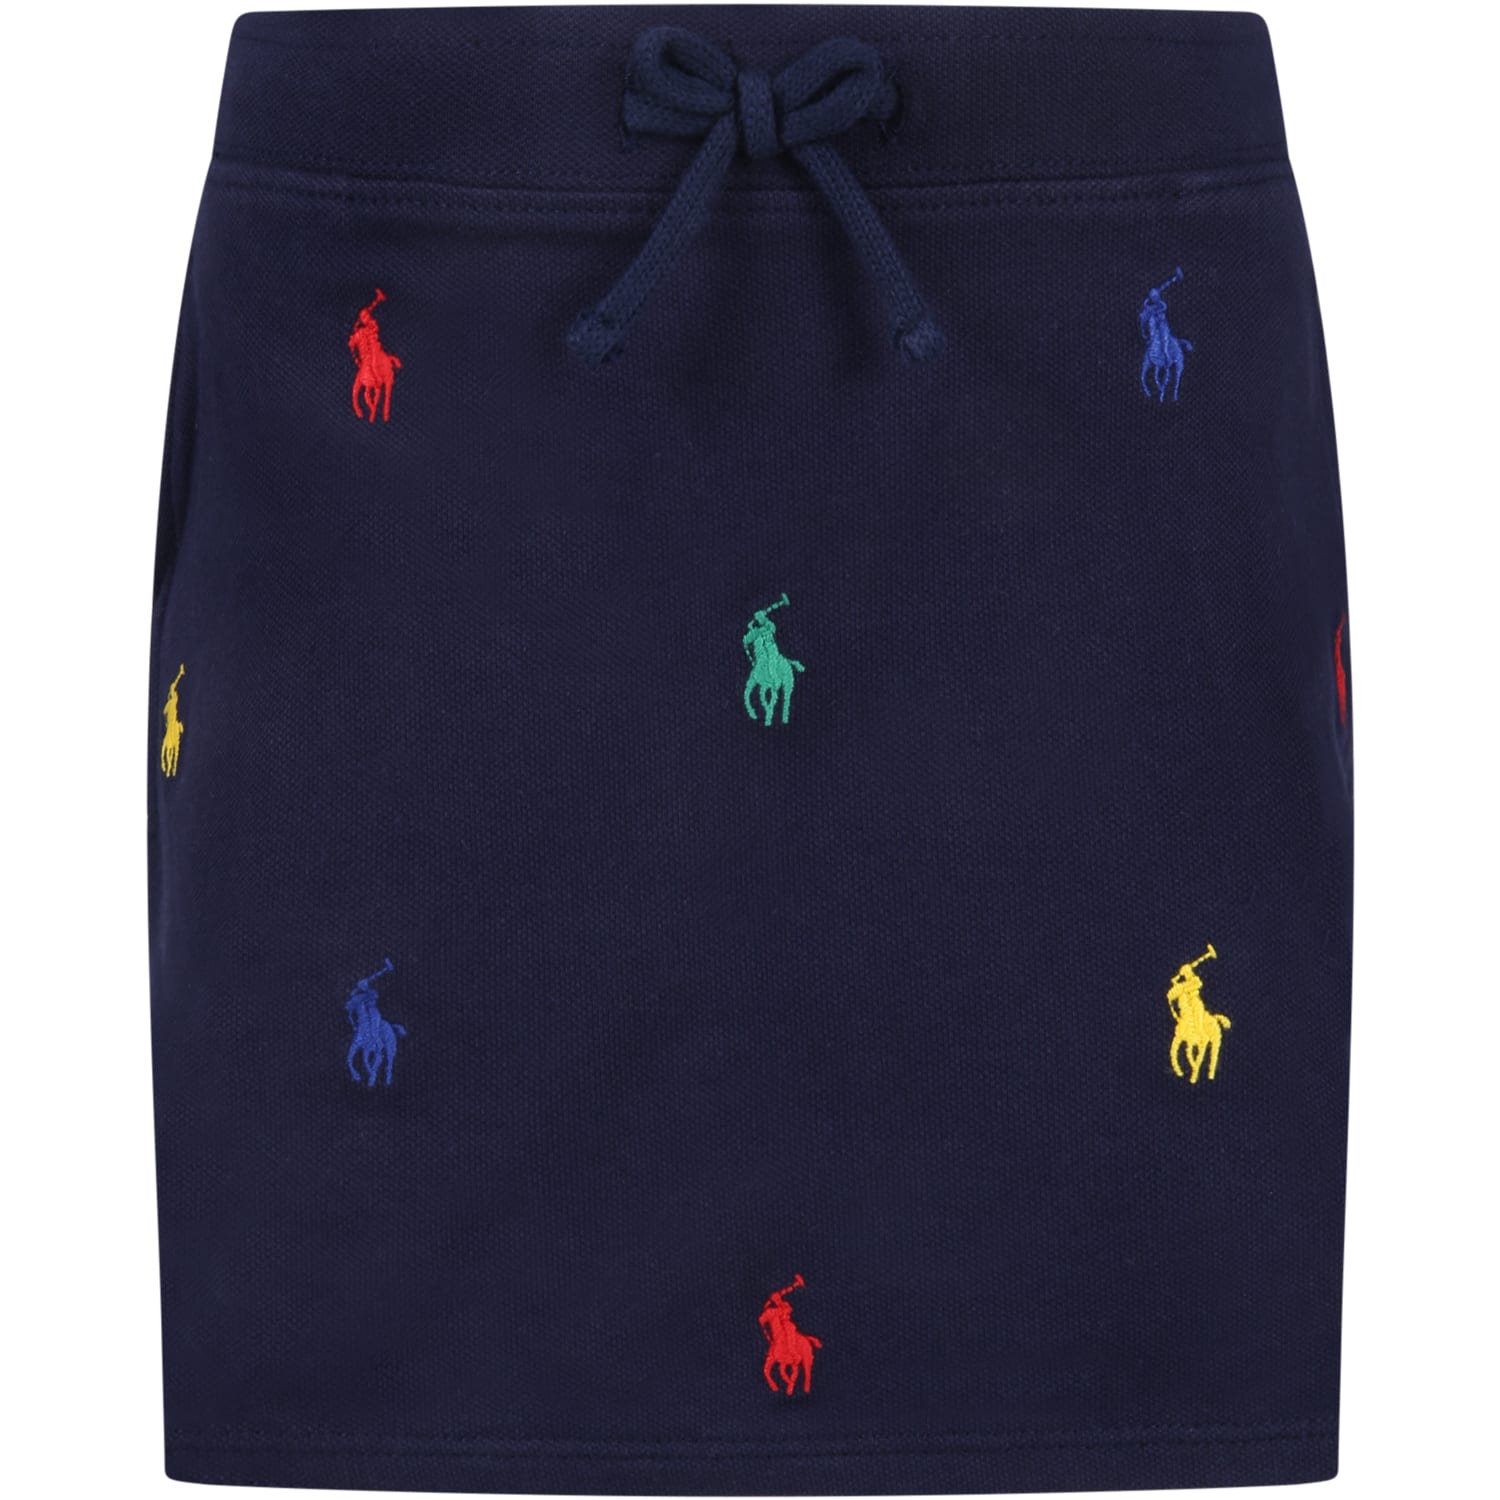 Ralph Lauren Blue Skirt For Baby Girl With Pony Logos